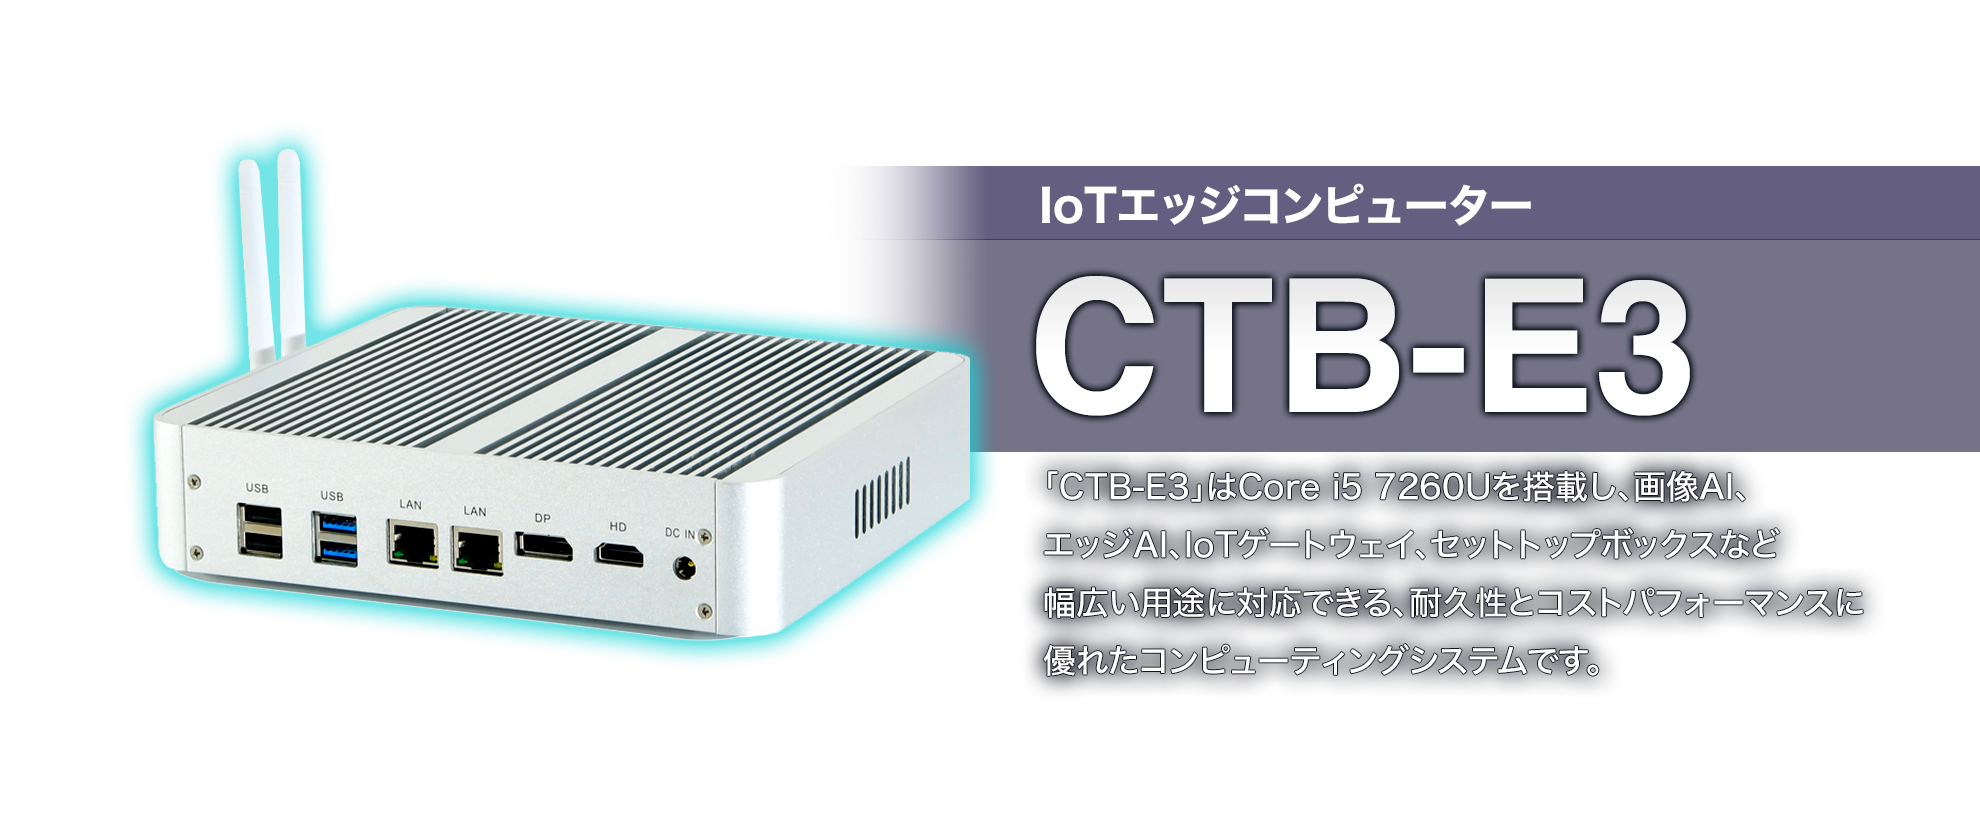 CTB-E3 IoTエッジコンピューター